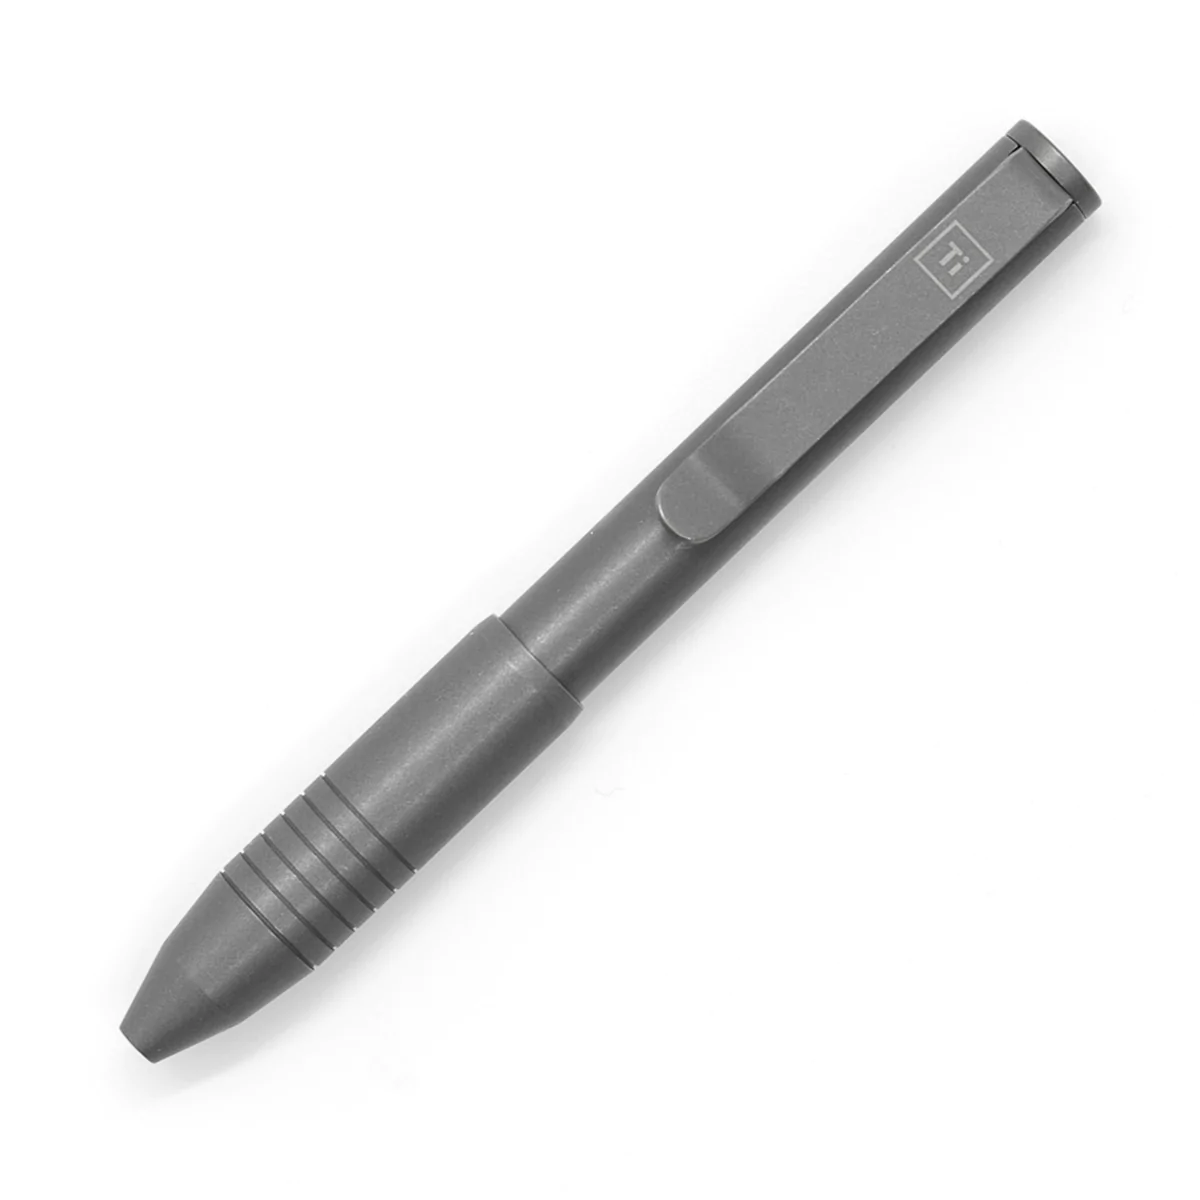 Ti Pocket Pro - The Auto Adjusting EDC Pen